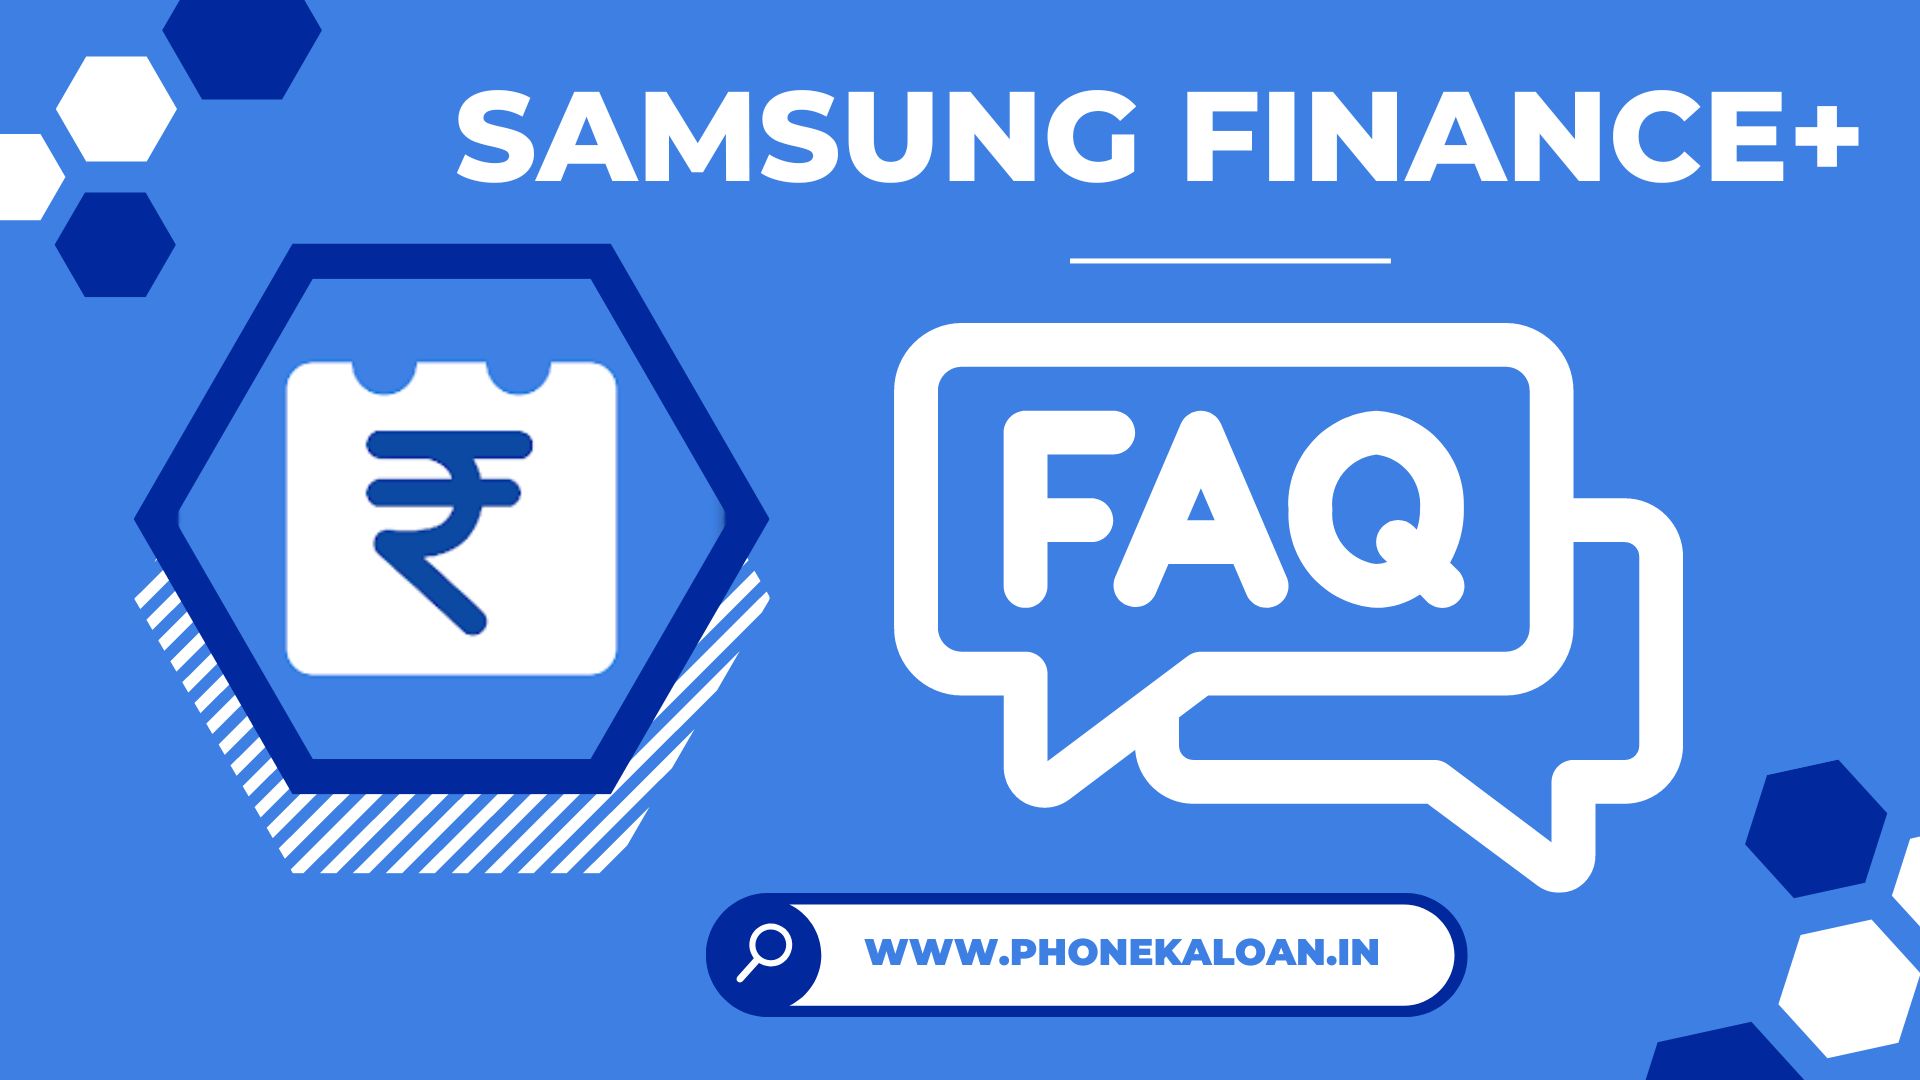 Samsung Finance+ Application FAQ